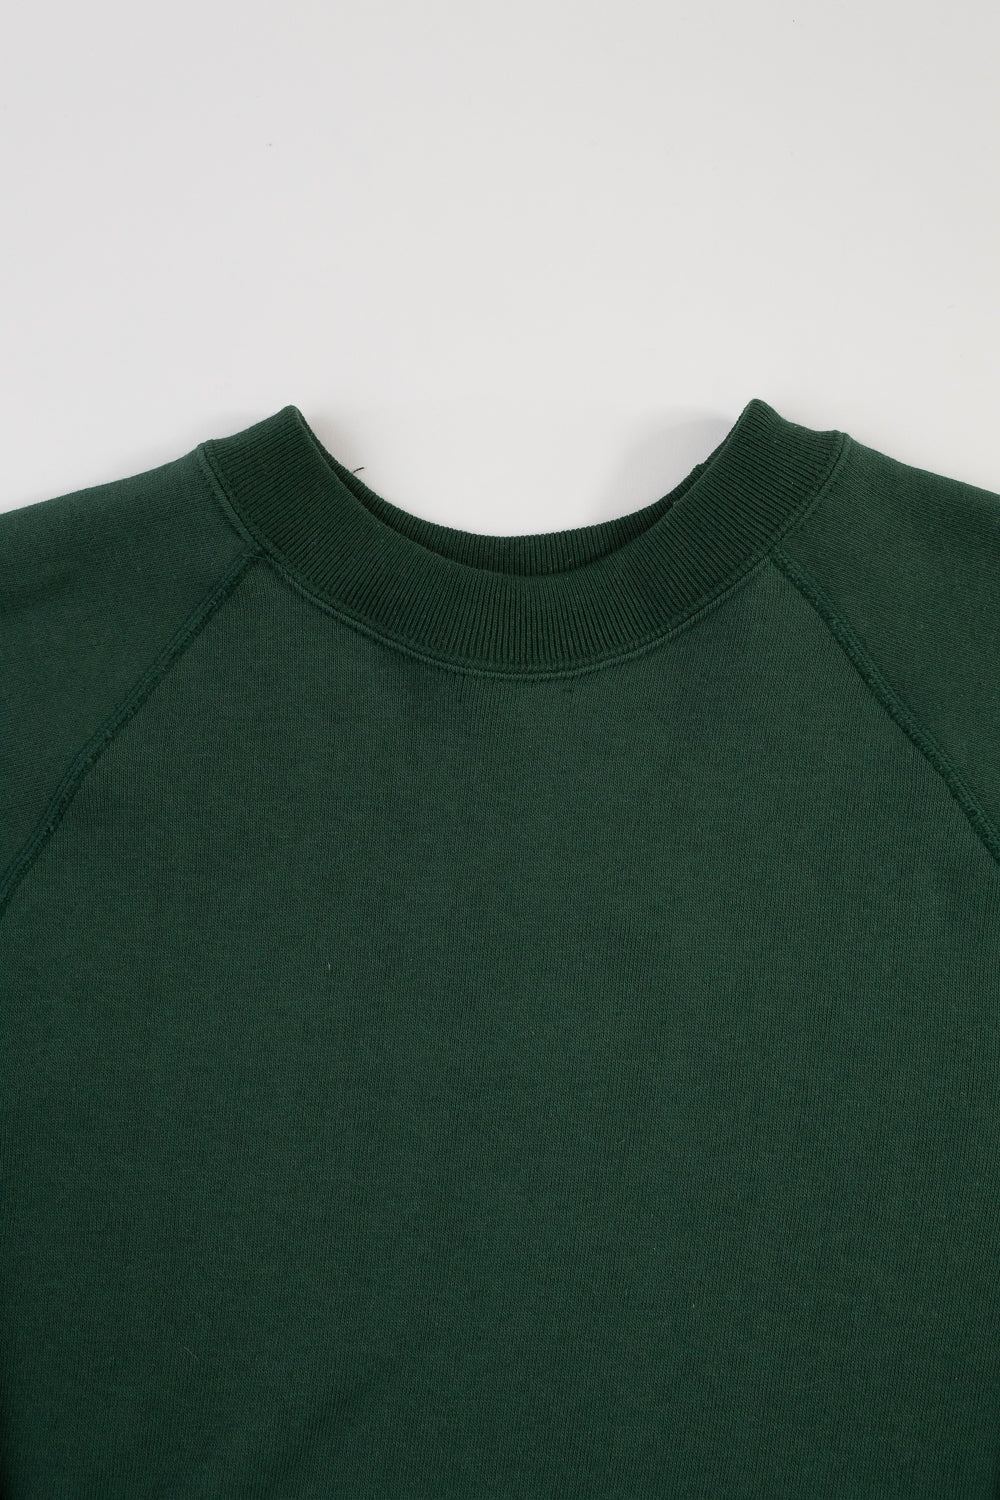 Lot 409 - Plain Crewneck Sweatshirt - Green